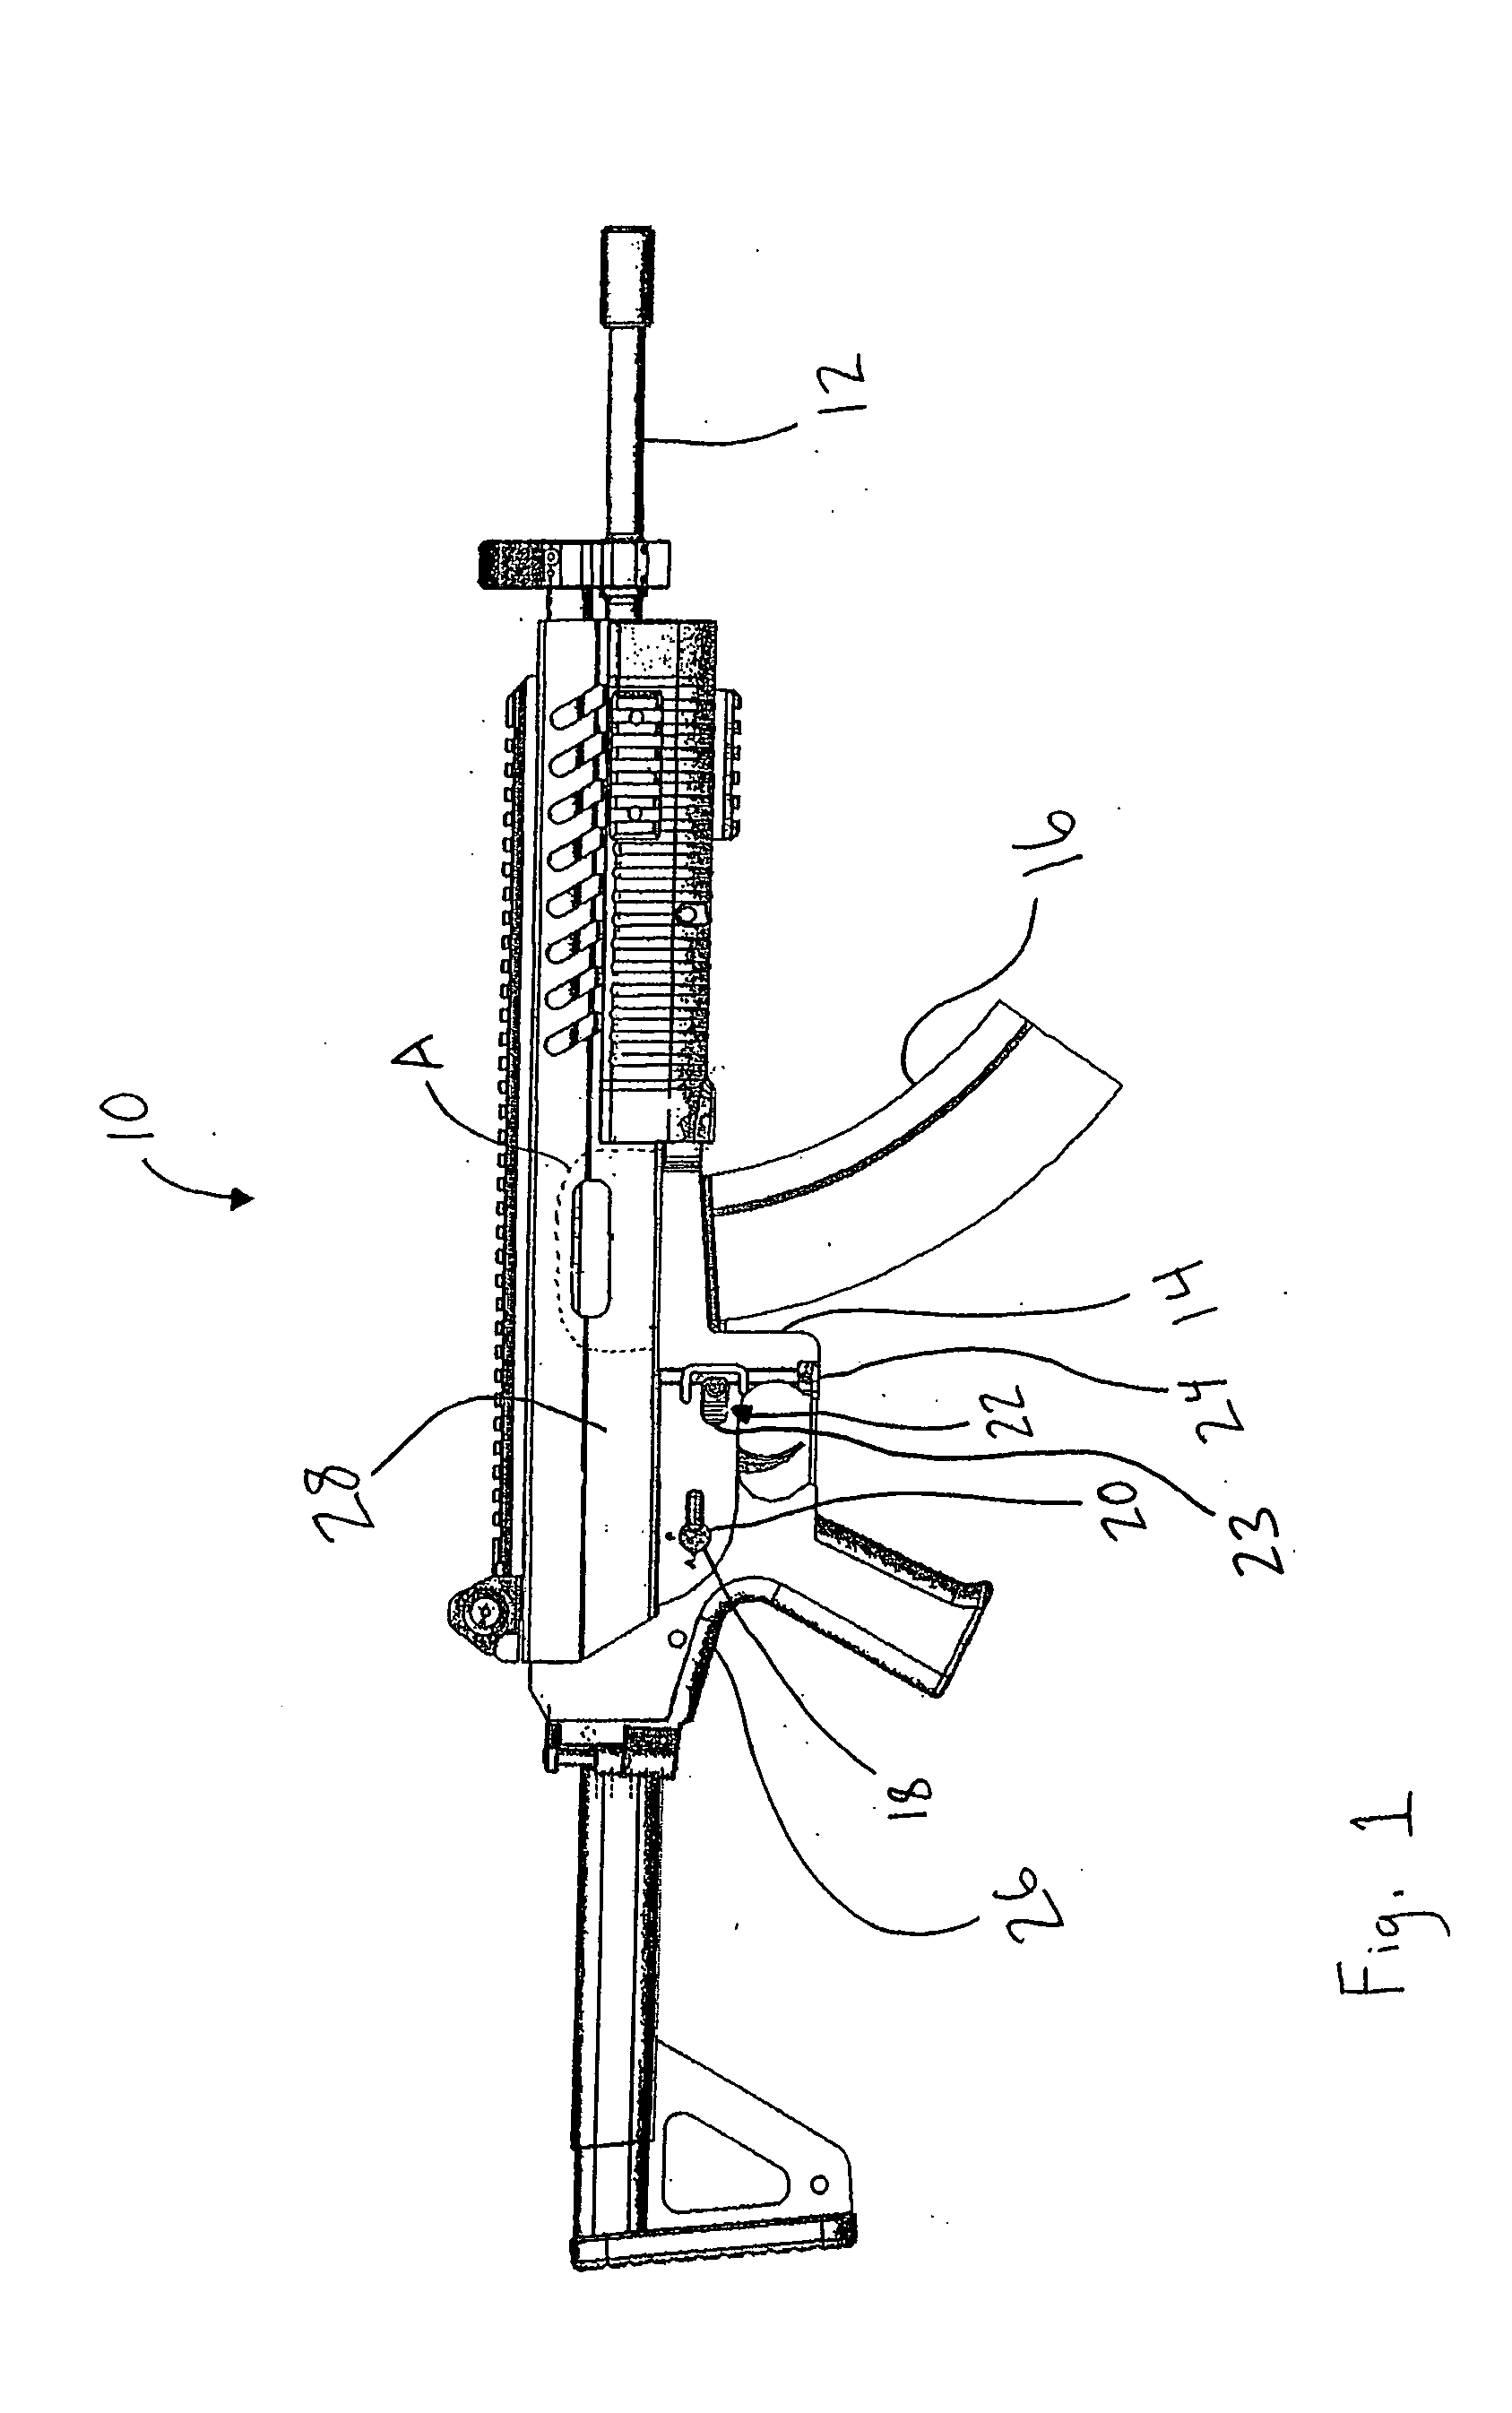 Multi-caliber ambidextrously controllable firearm